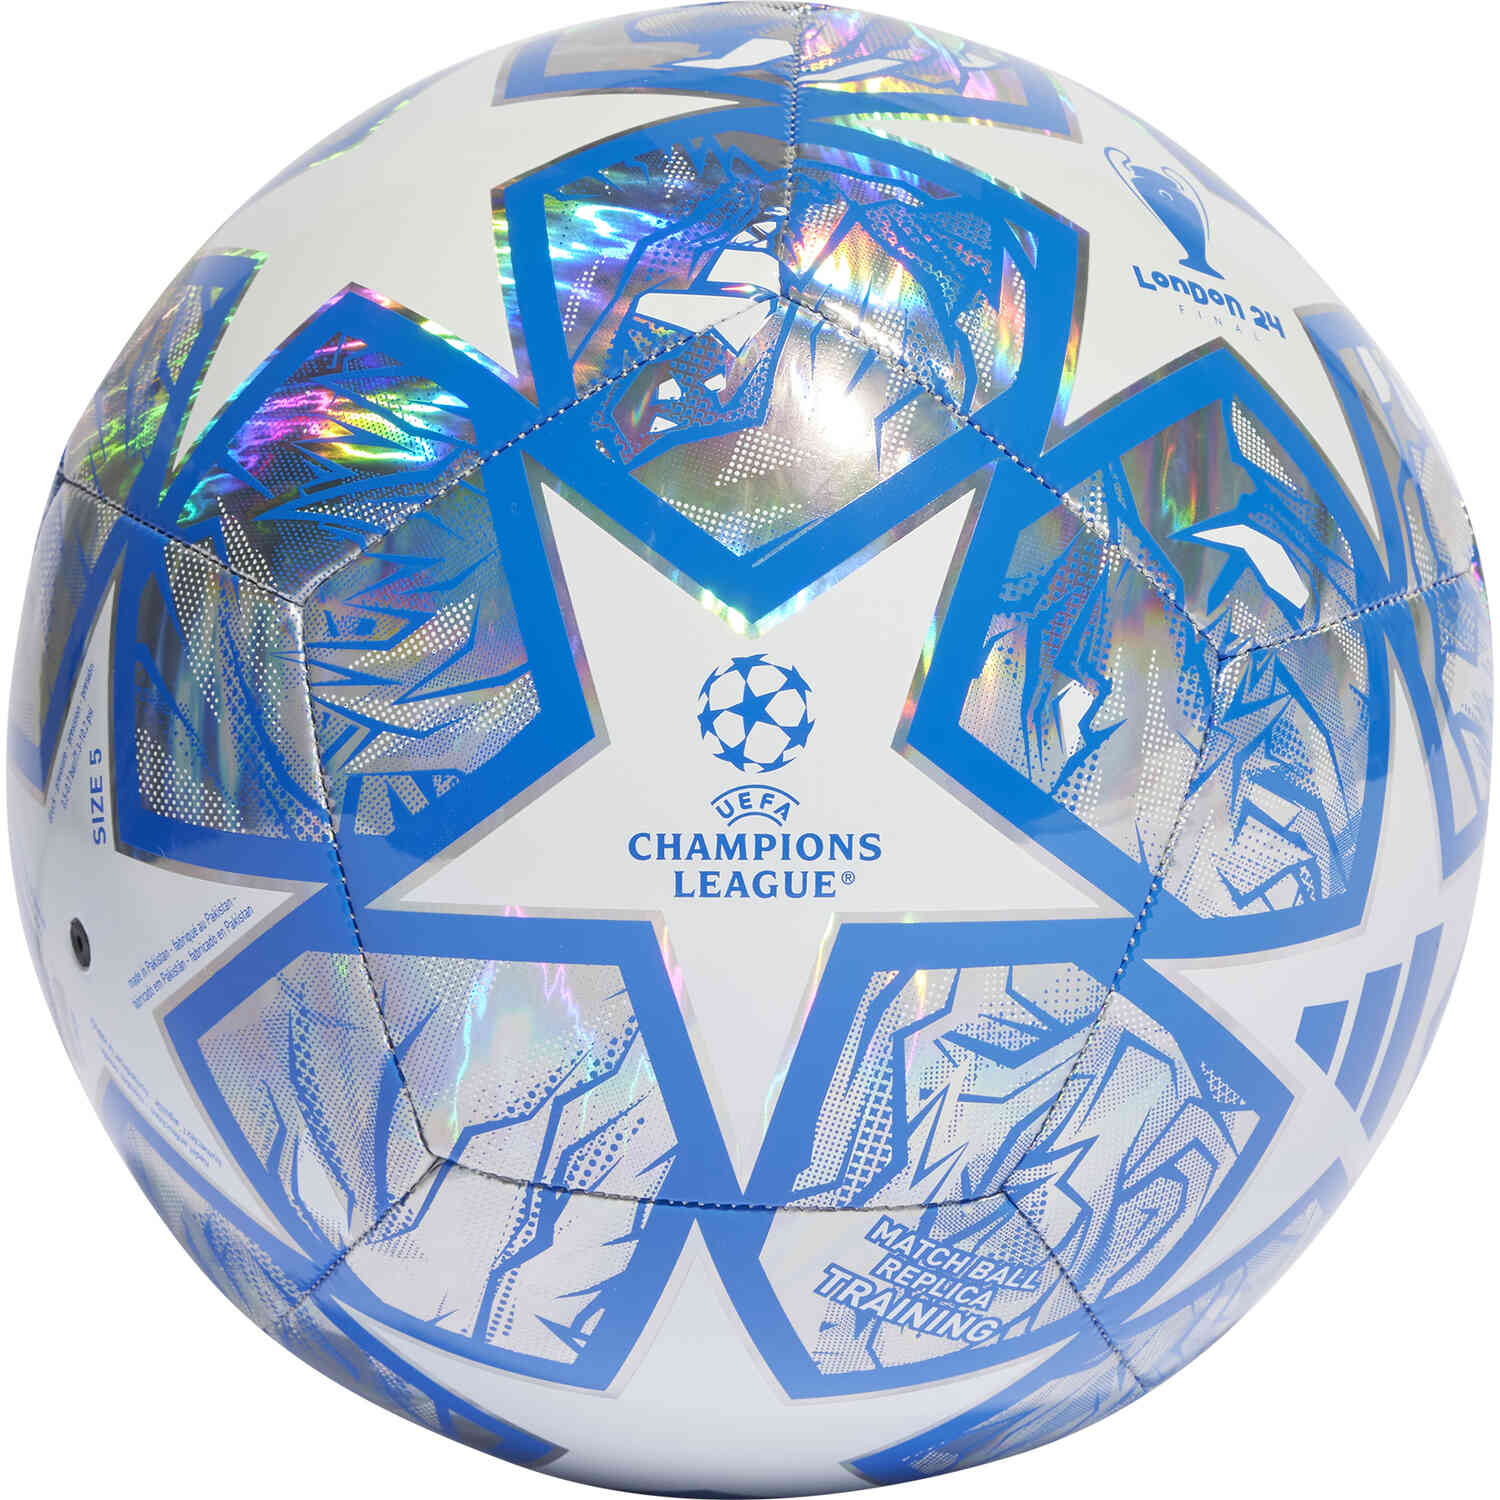 Adidas UEFA Champions League Hologram Foil Soccer Ball